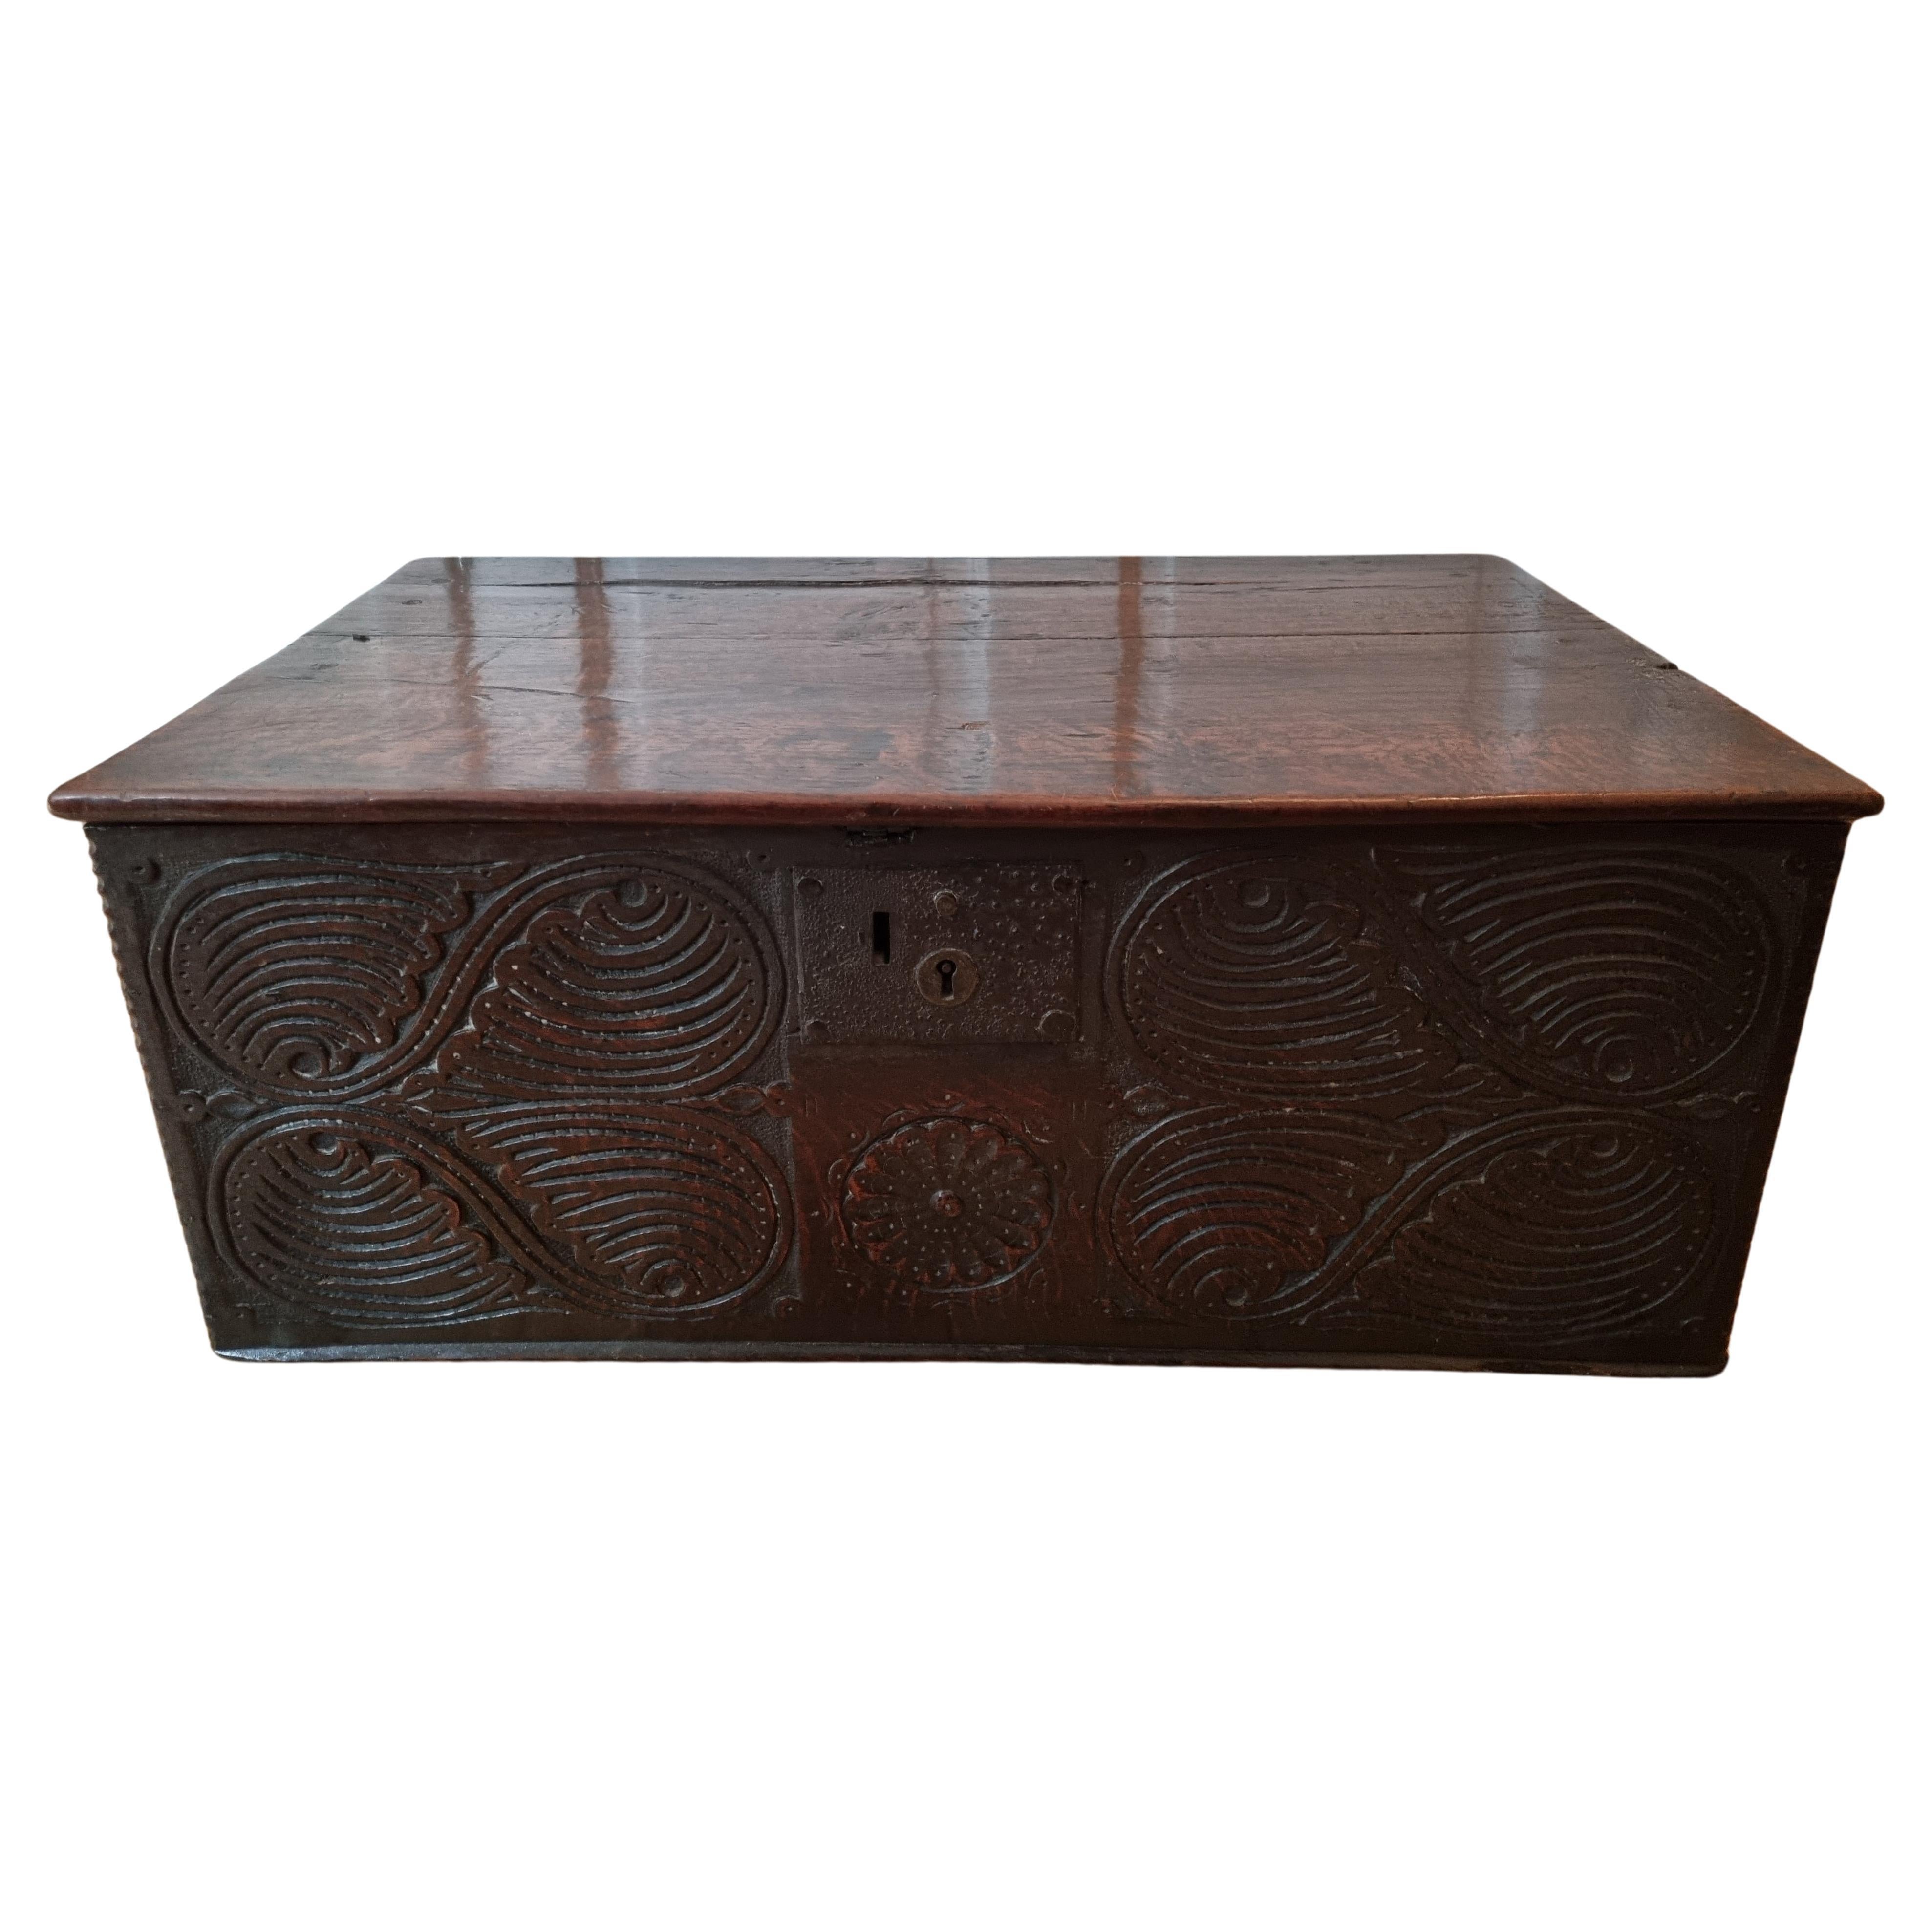 17th Century Carved Oak Document Box